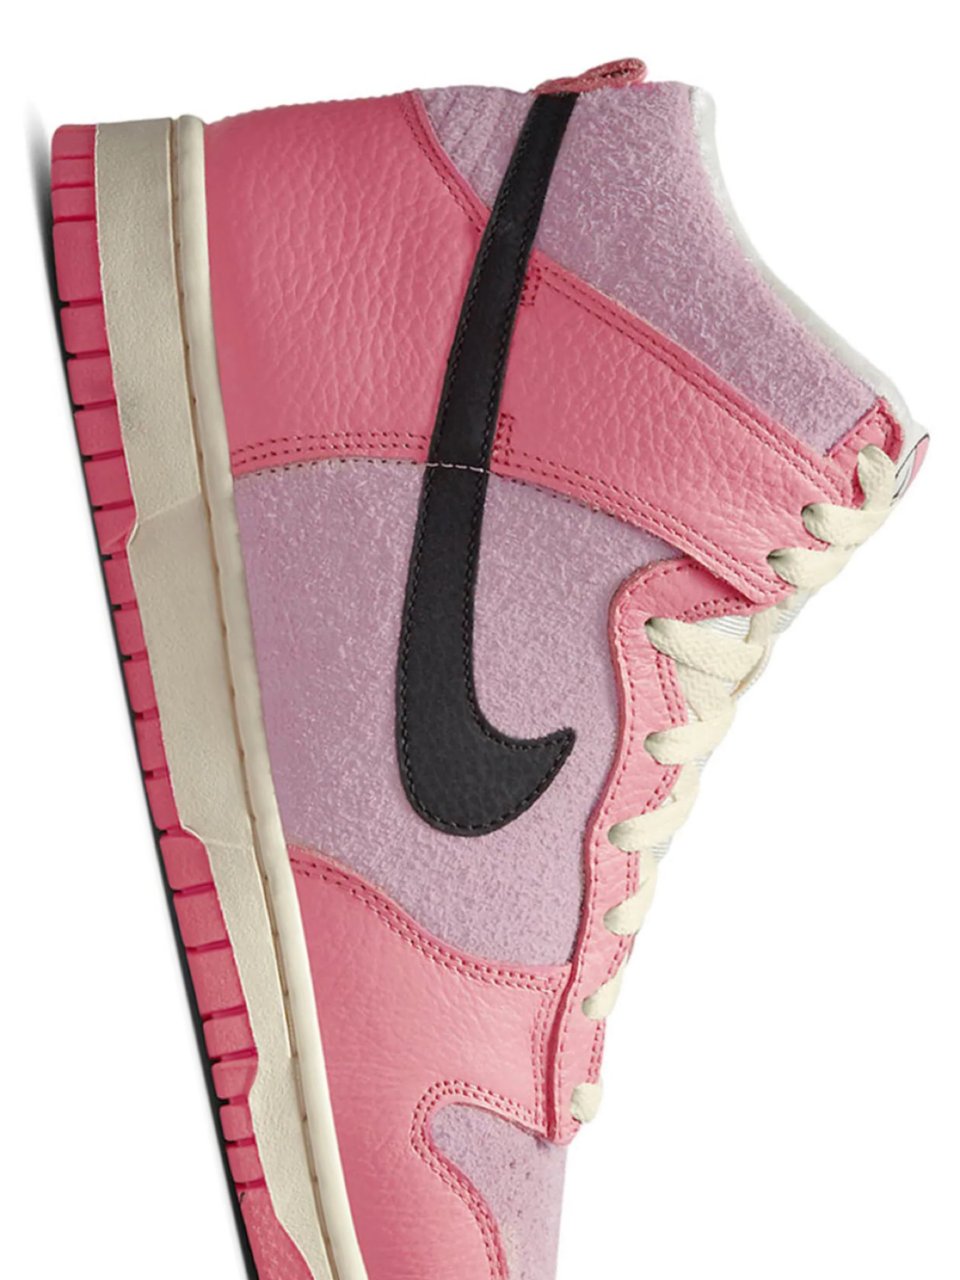 Nike dunk high pink